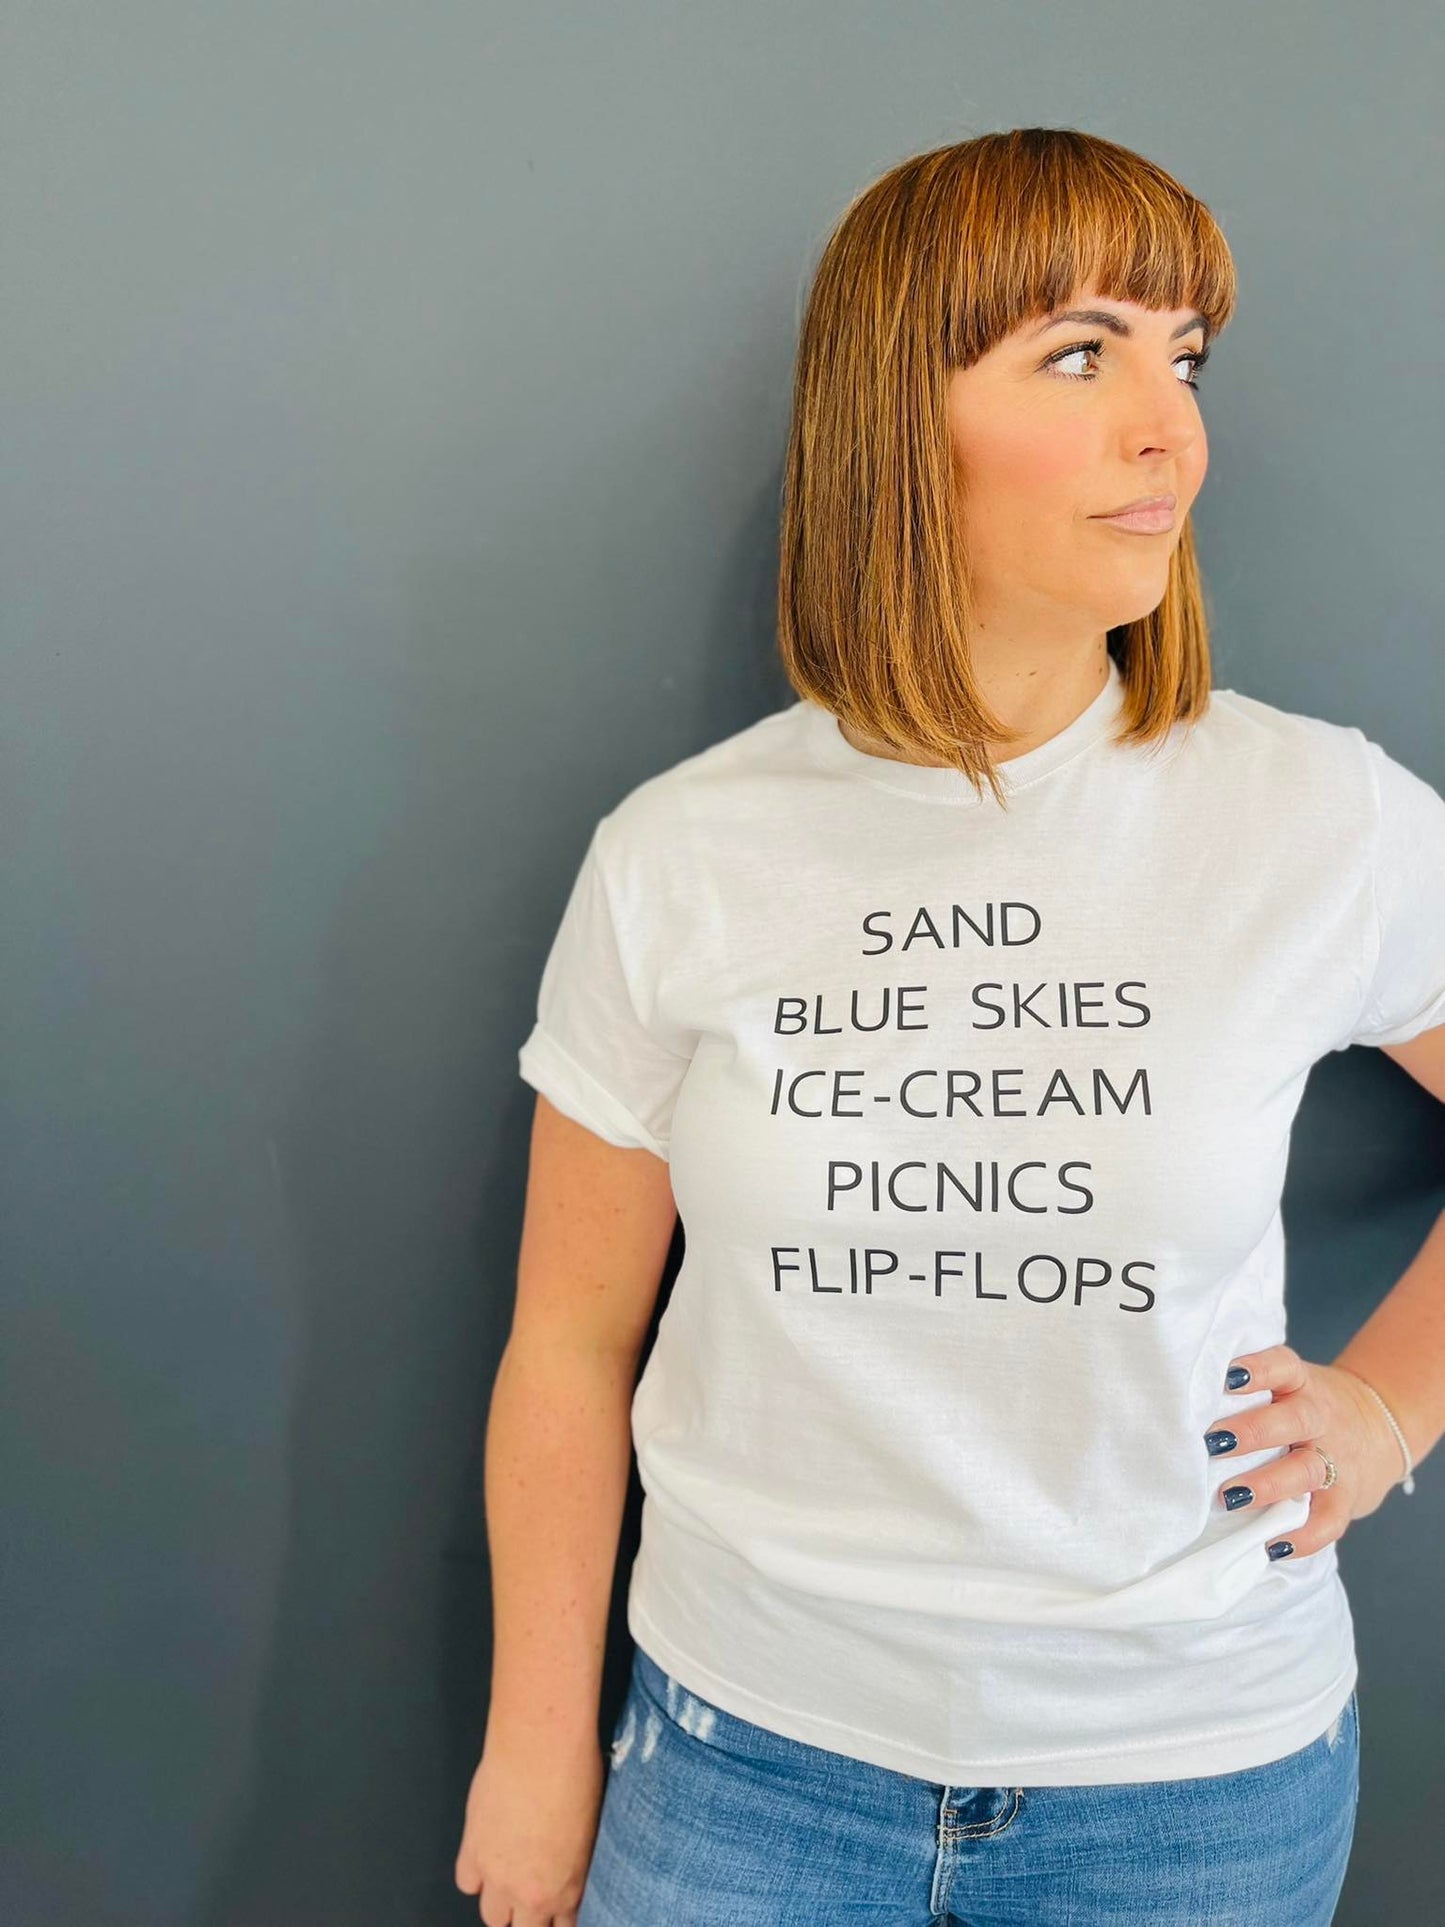 Slogan Tee t-shirt Summer Wear Words Sand Ice-cream flipflops sand picnics